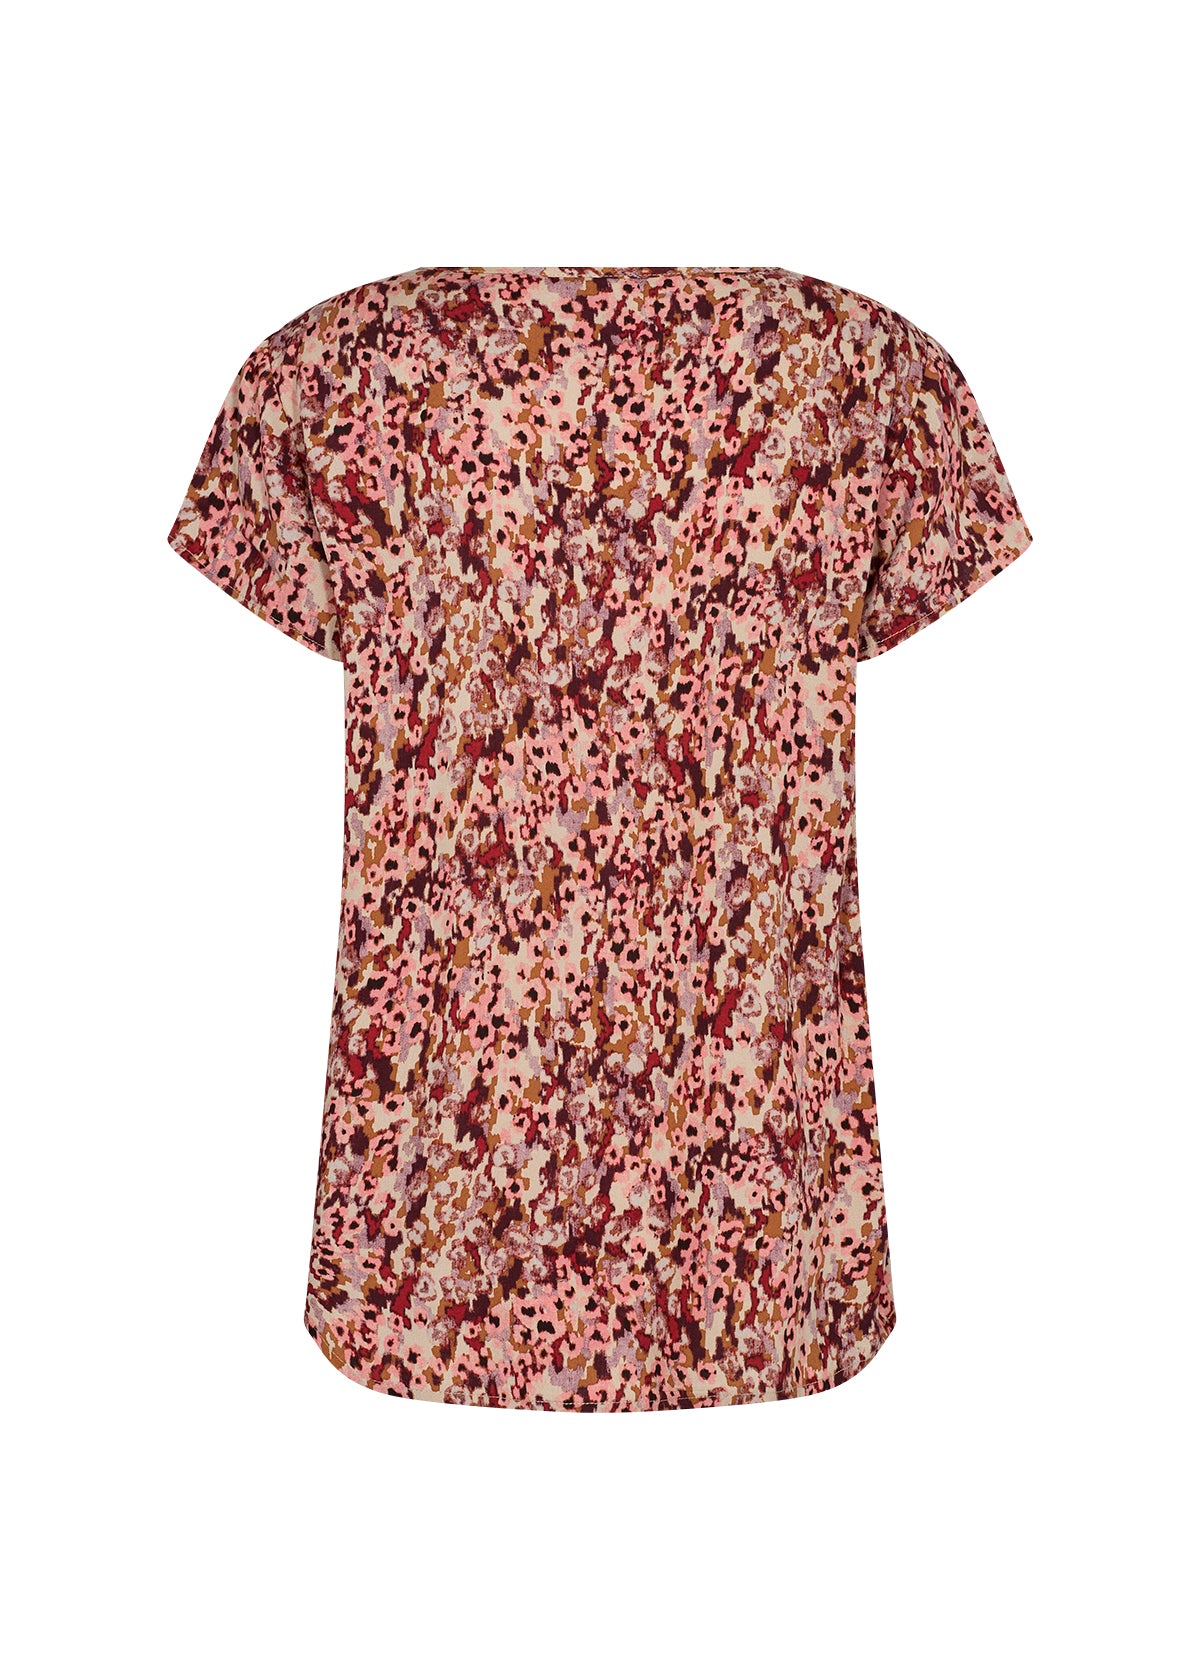 Soya Concept cap sleeve blouse